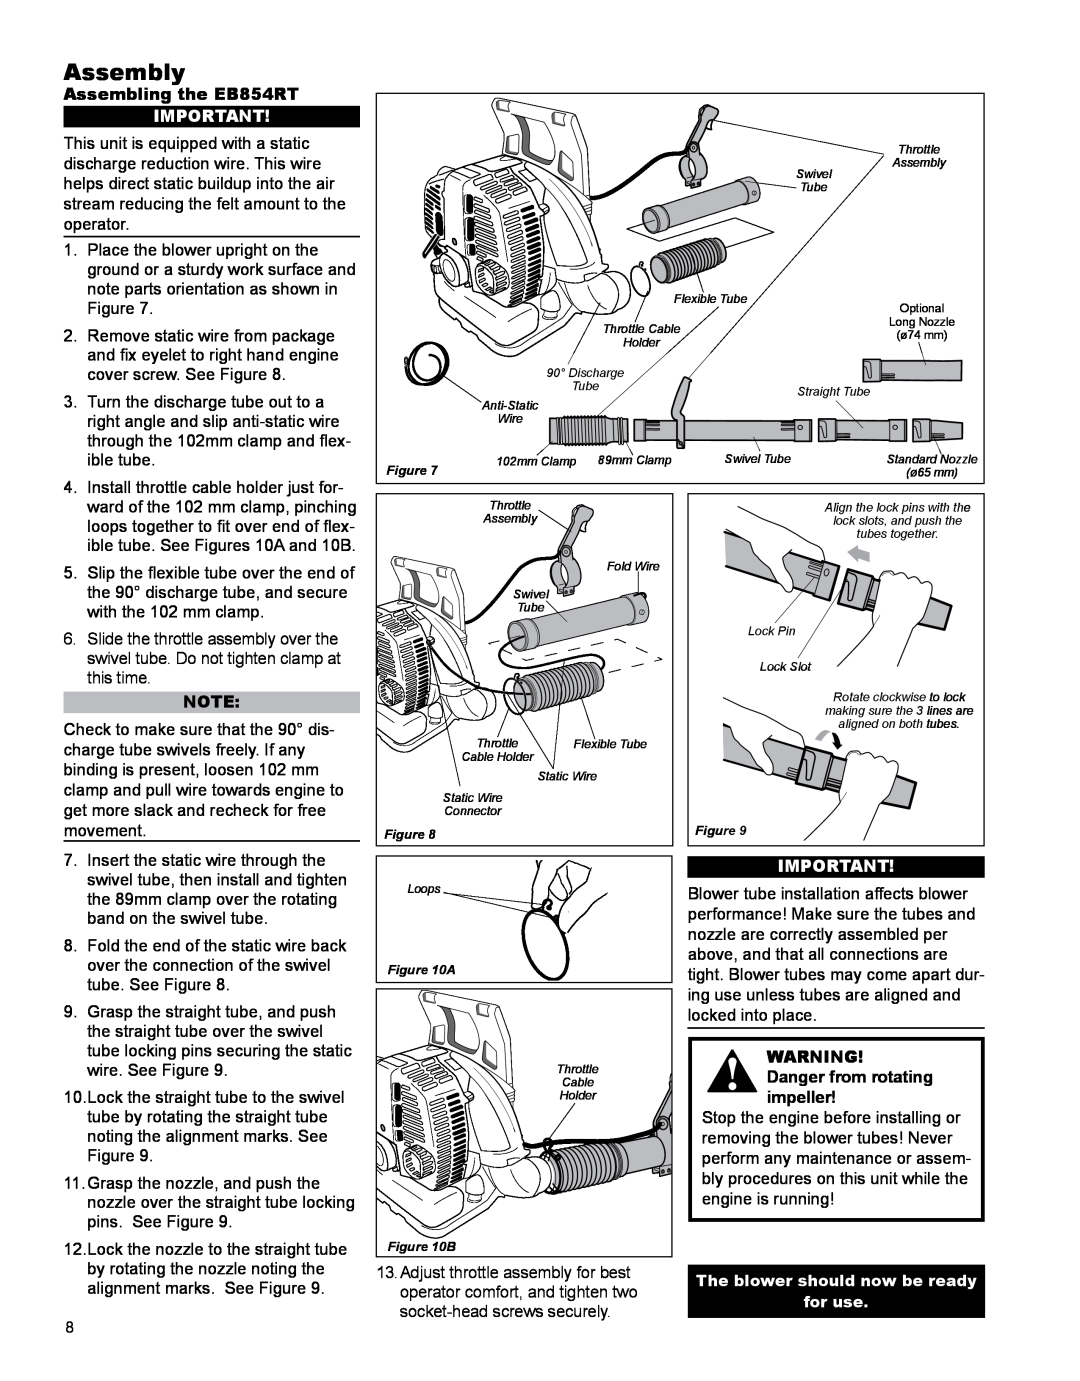 Shindaiwa X7501970601 manual Assembling the EB854RT, Danger from rotating impeller, Assembly 